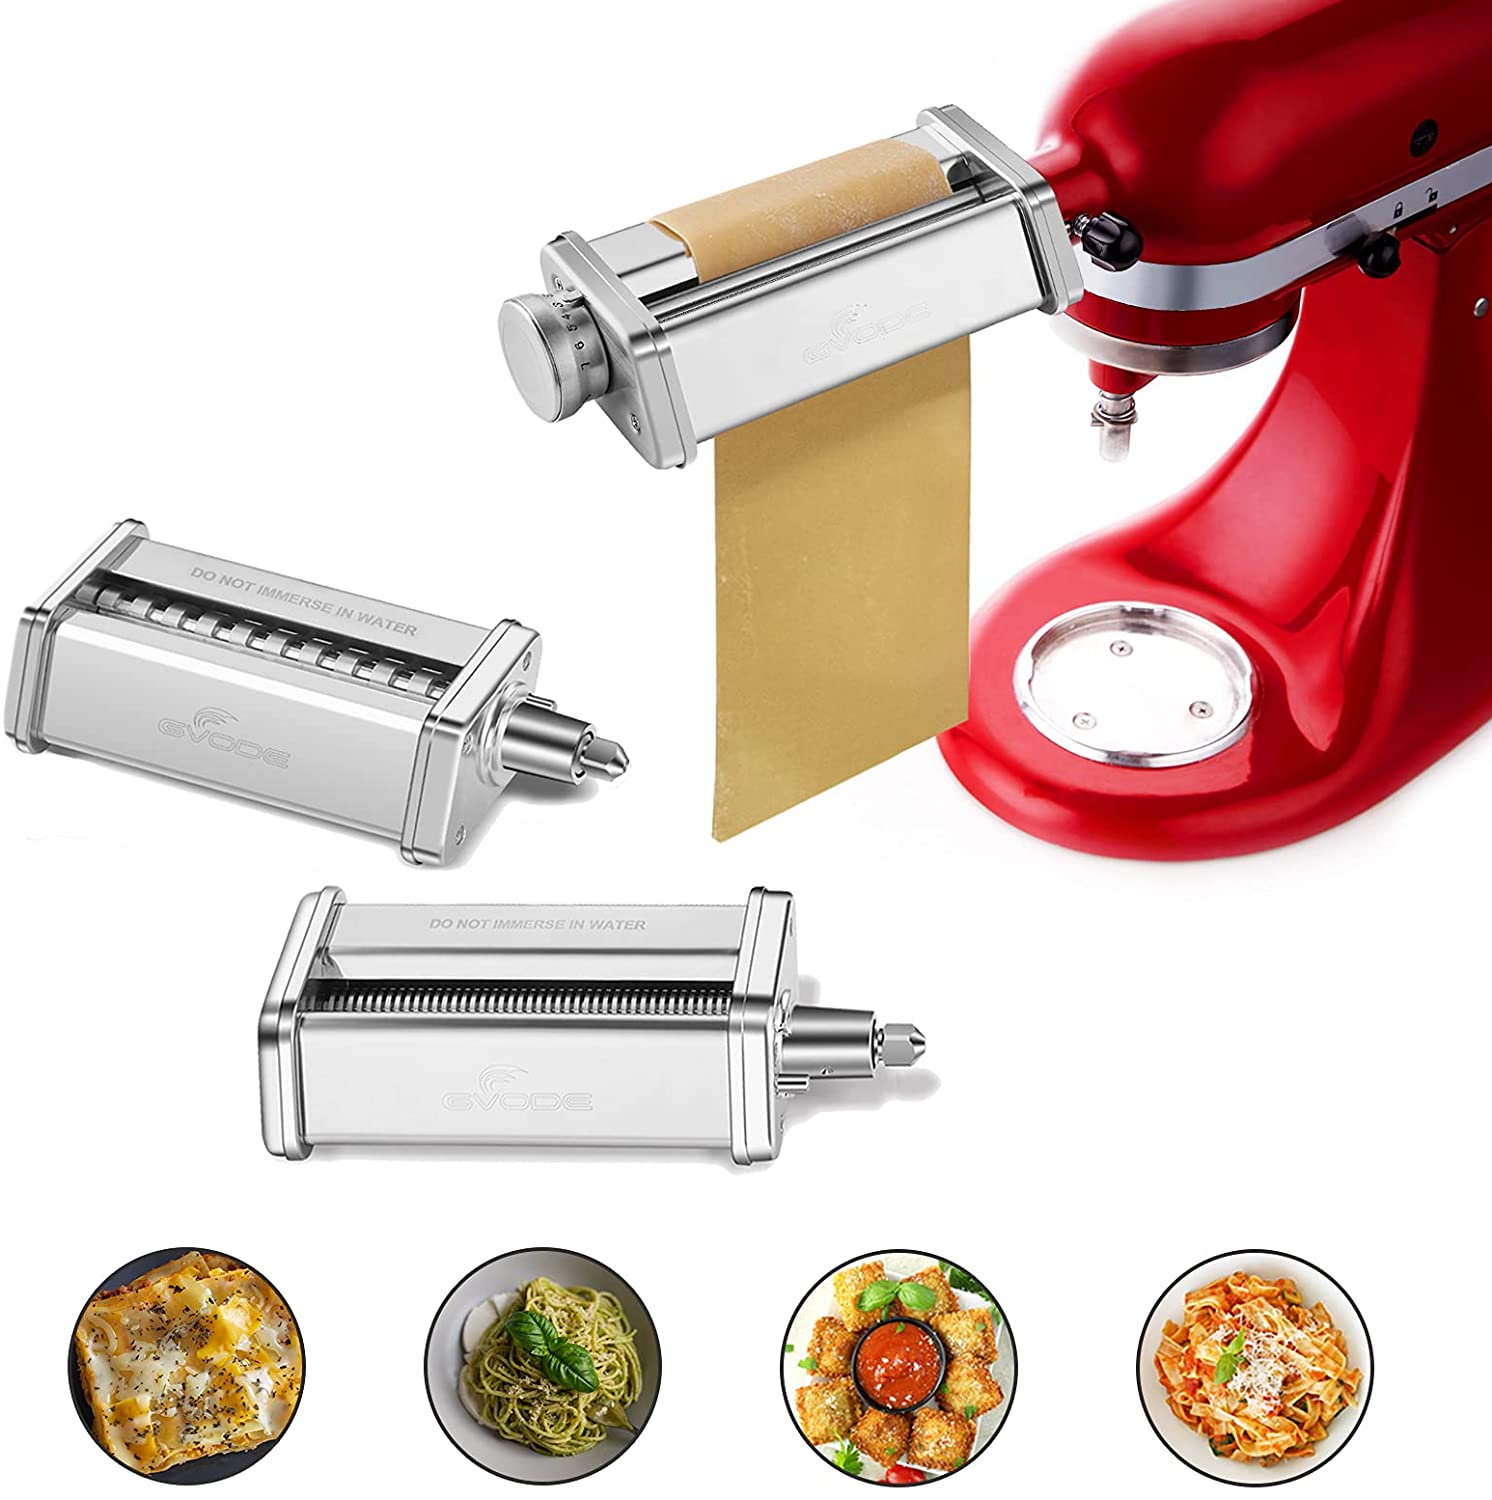 https://www.dontwasteyourmoney.com/wp-content/uploads/2019/12/gvode-pasta-roller-cutter-stainless-steel-pasta-maker-set-3-piece-1.jpg